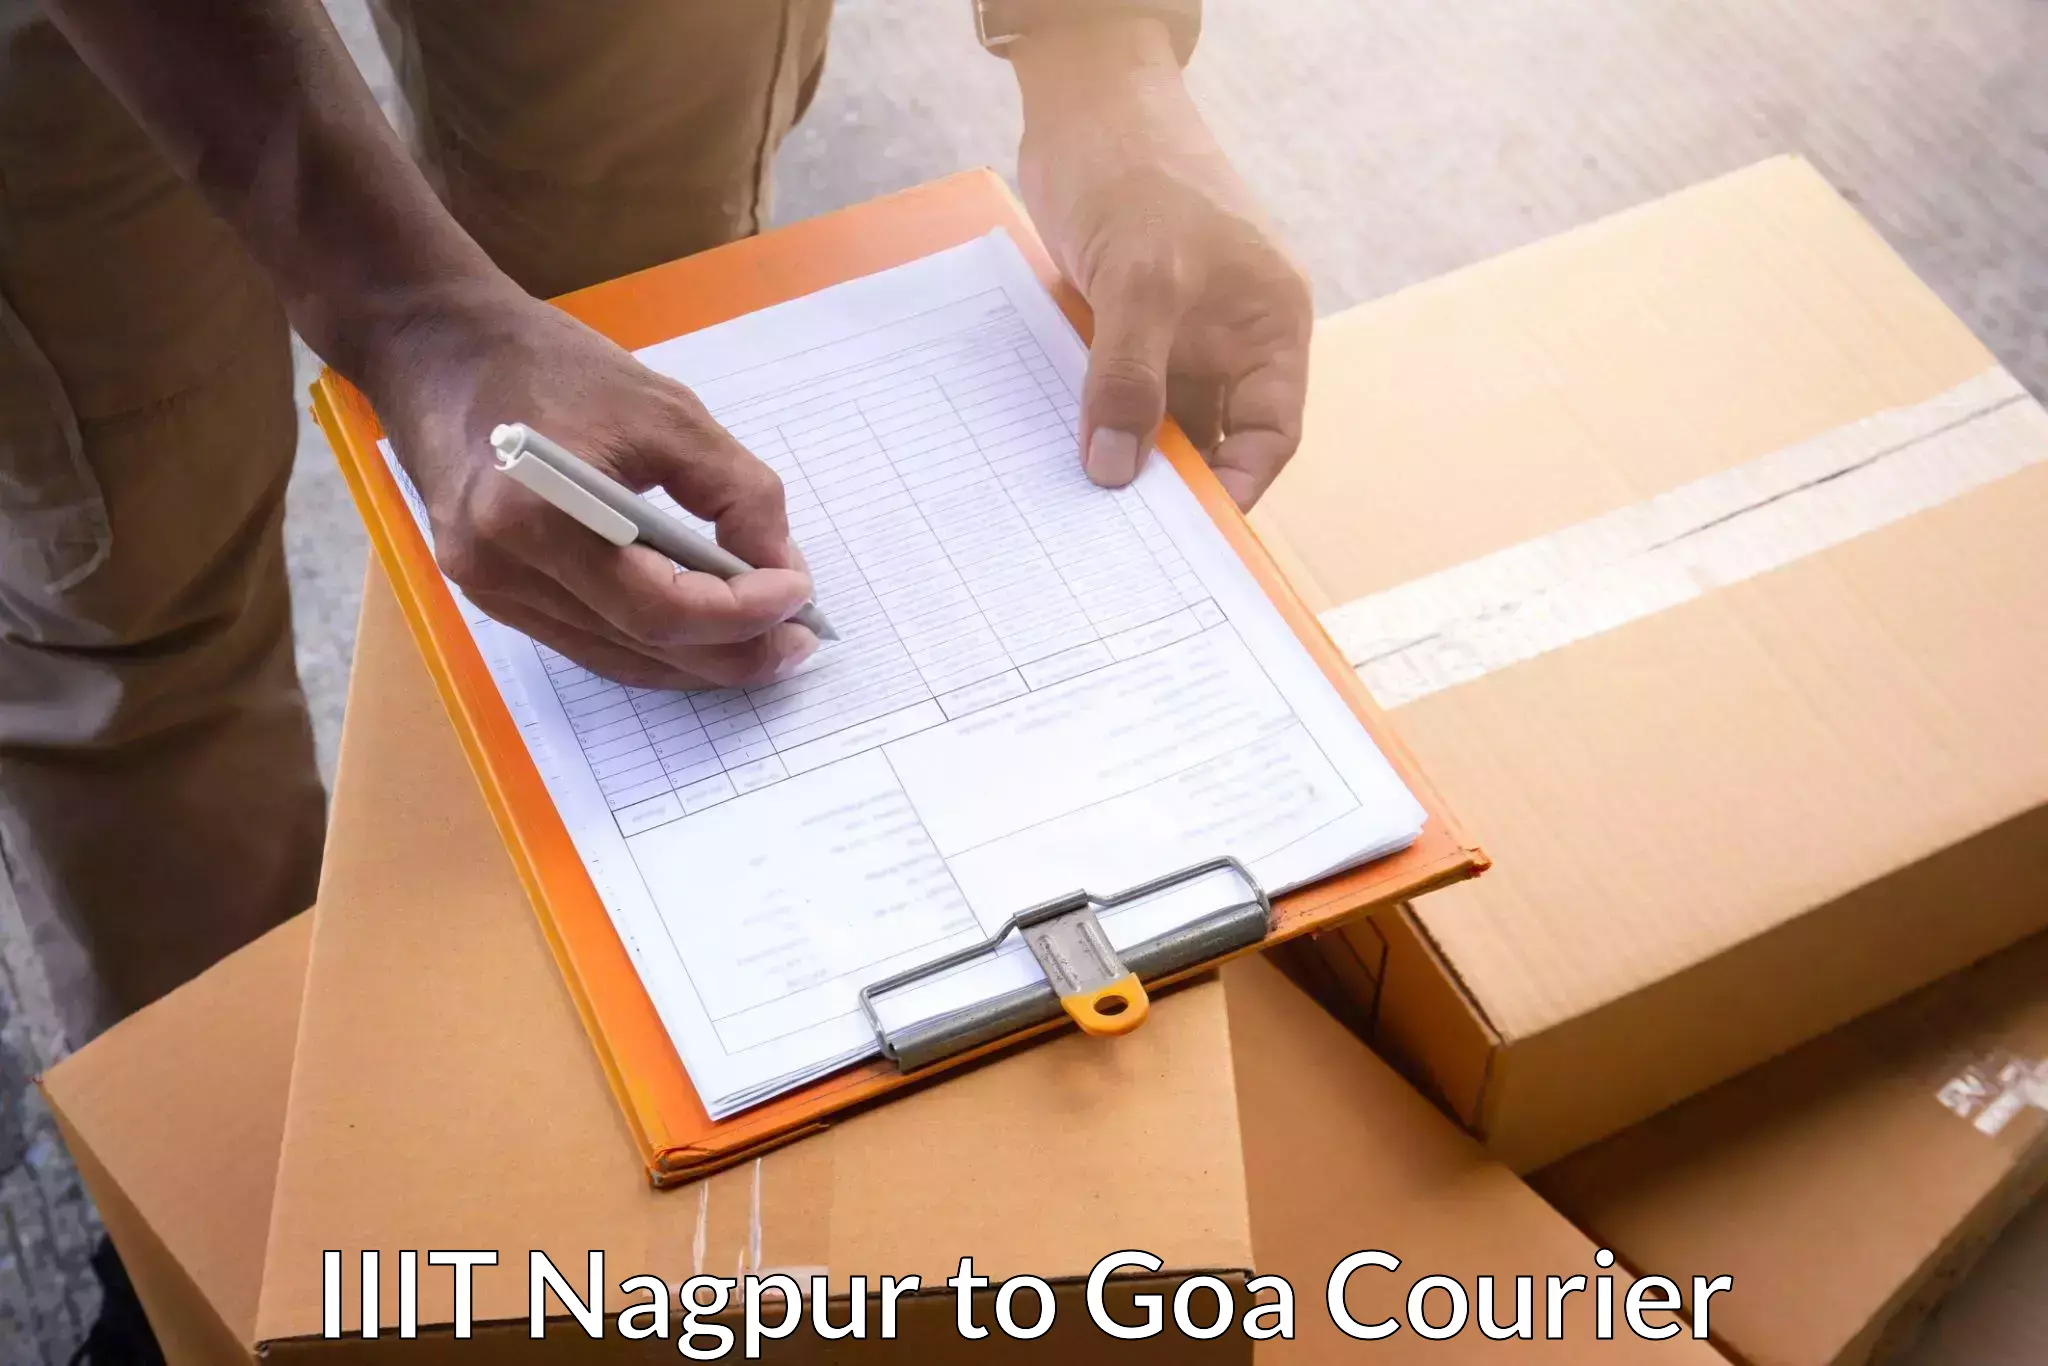 Courier service innovation IIIT Nagpur to Panaji